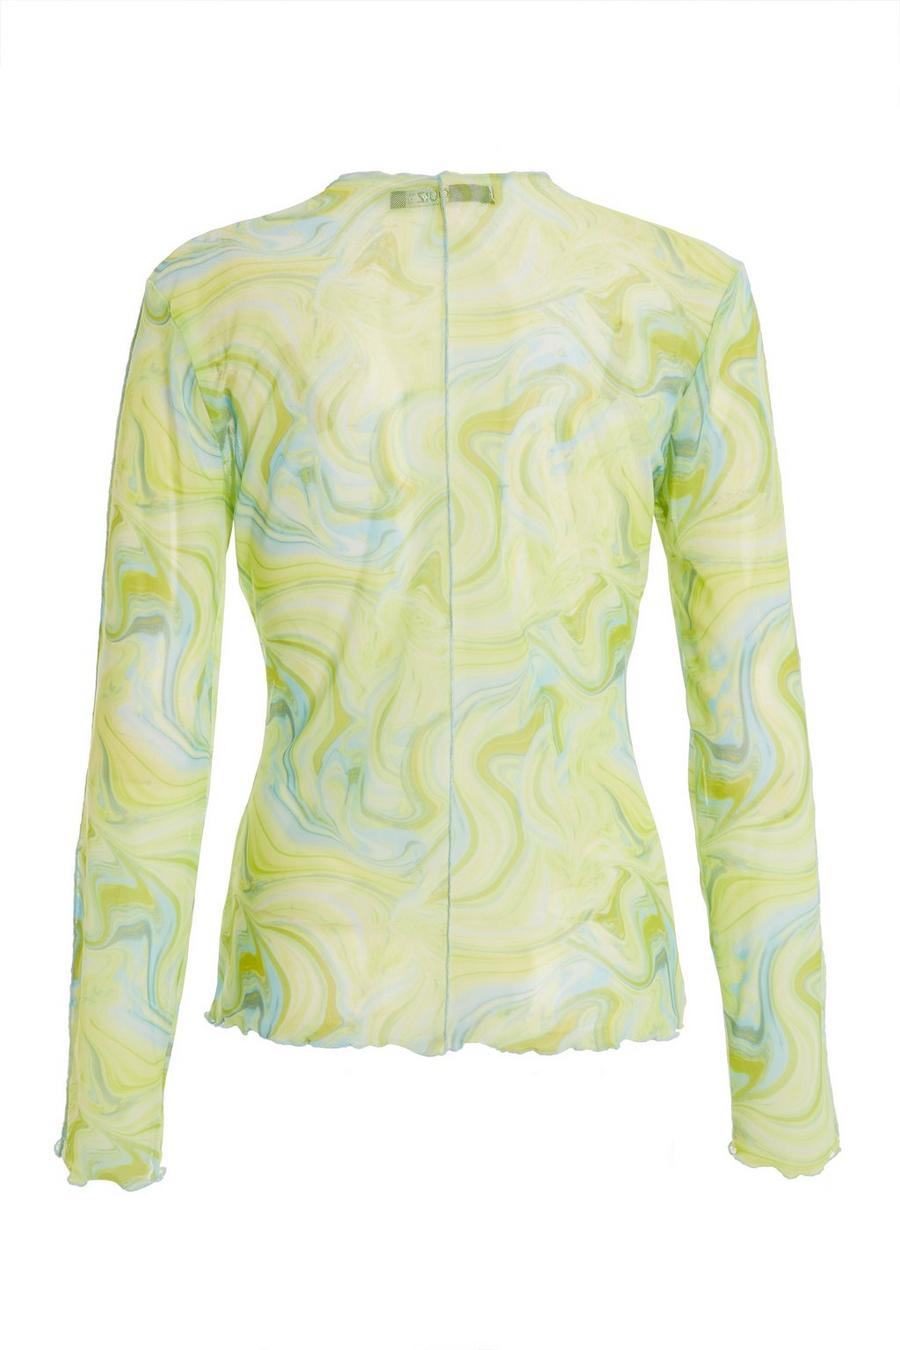 Lime Marble Print Mesh Top - Quiz Clothing